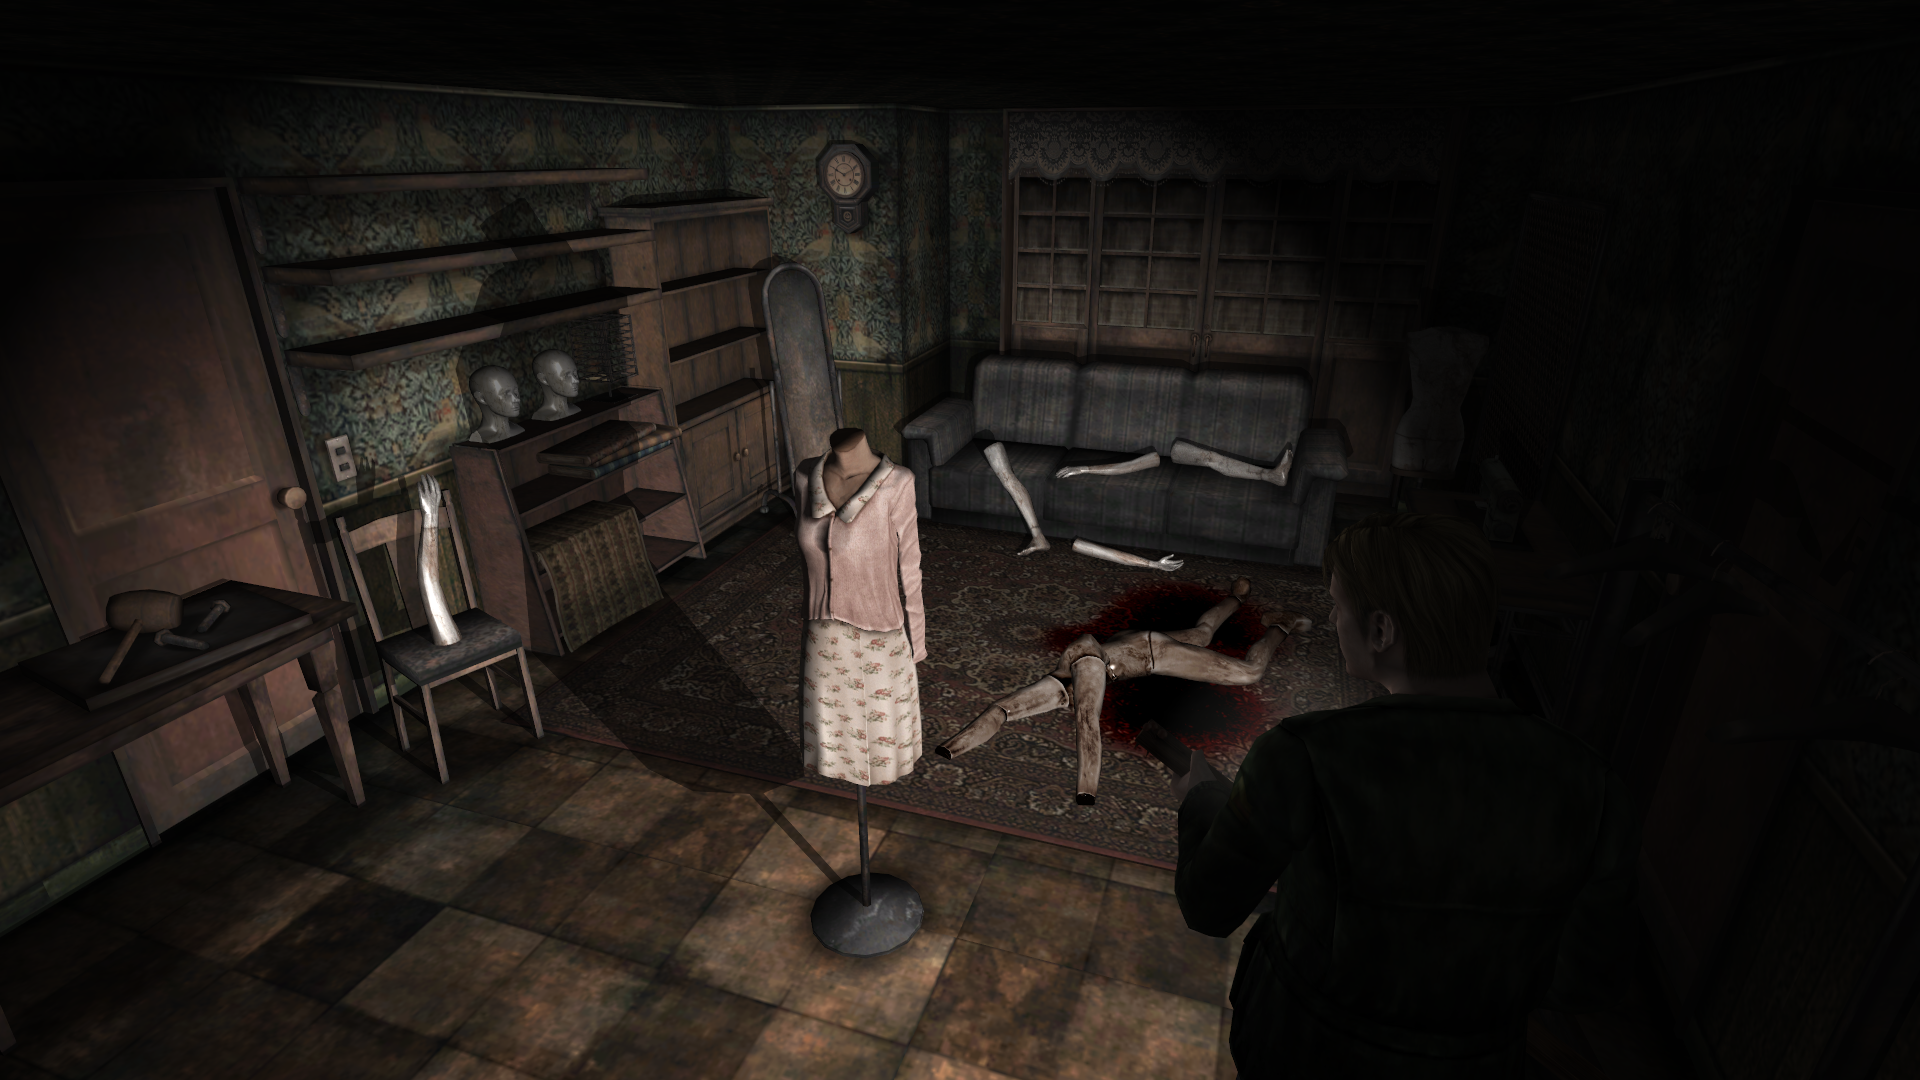 Silent Hill 2 Remake: imagens vazam nas redes, segundo rumor